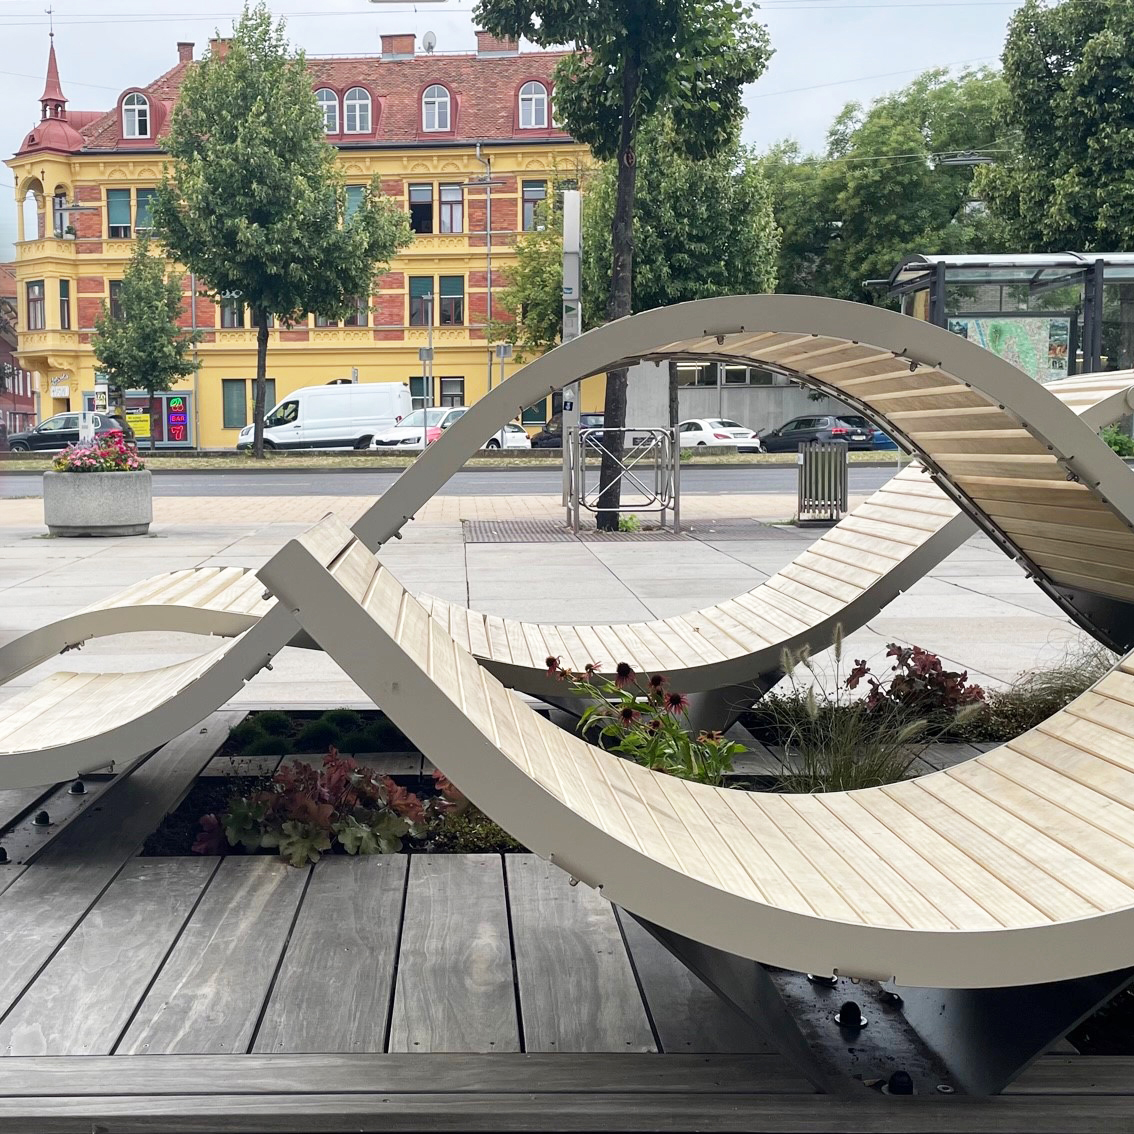 Surfin Graz, Austria-Fipe Architects-Hechenblaickner-square3